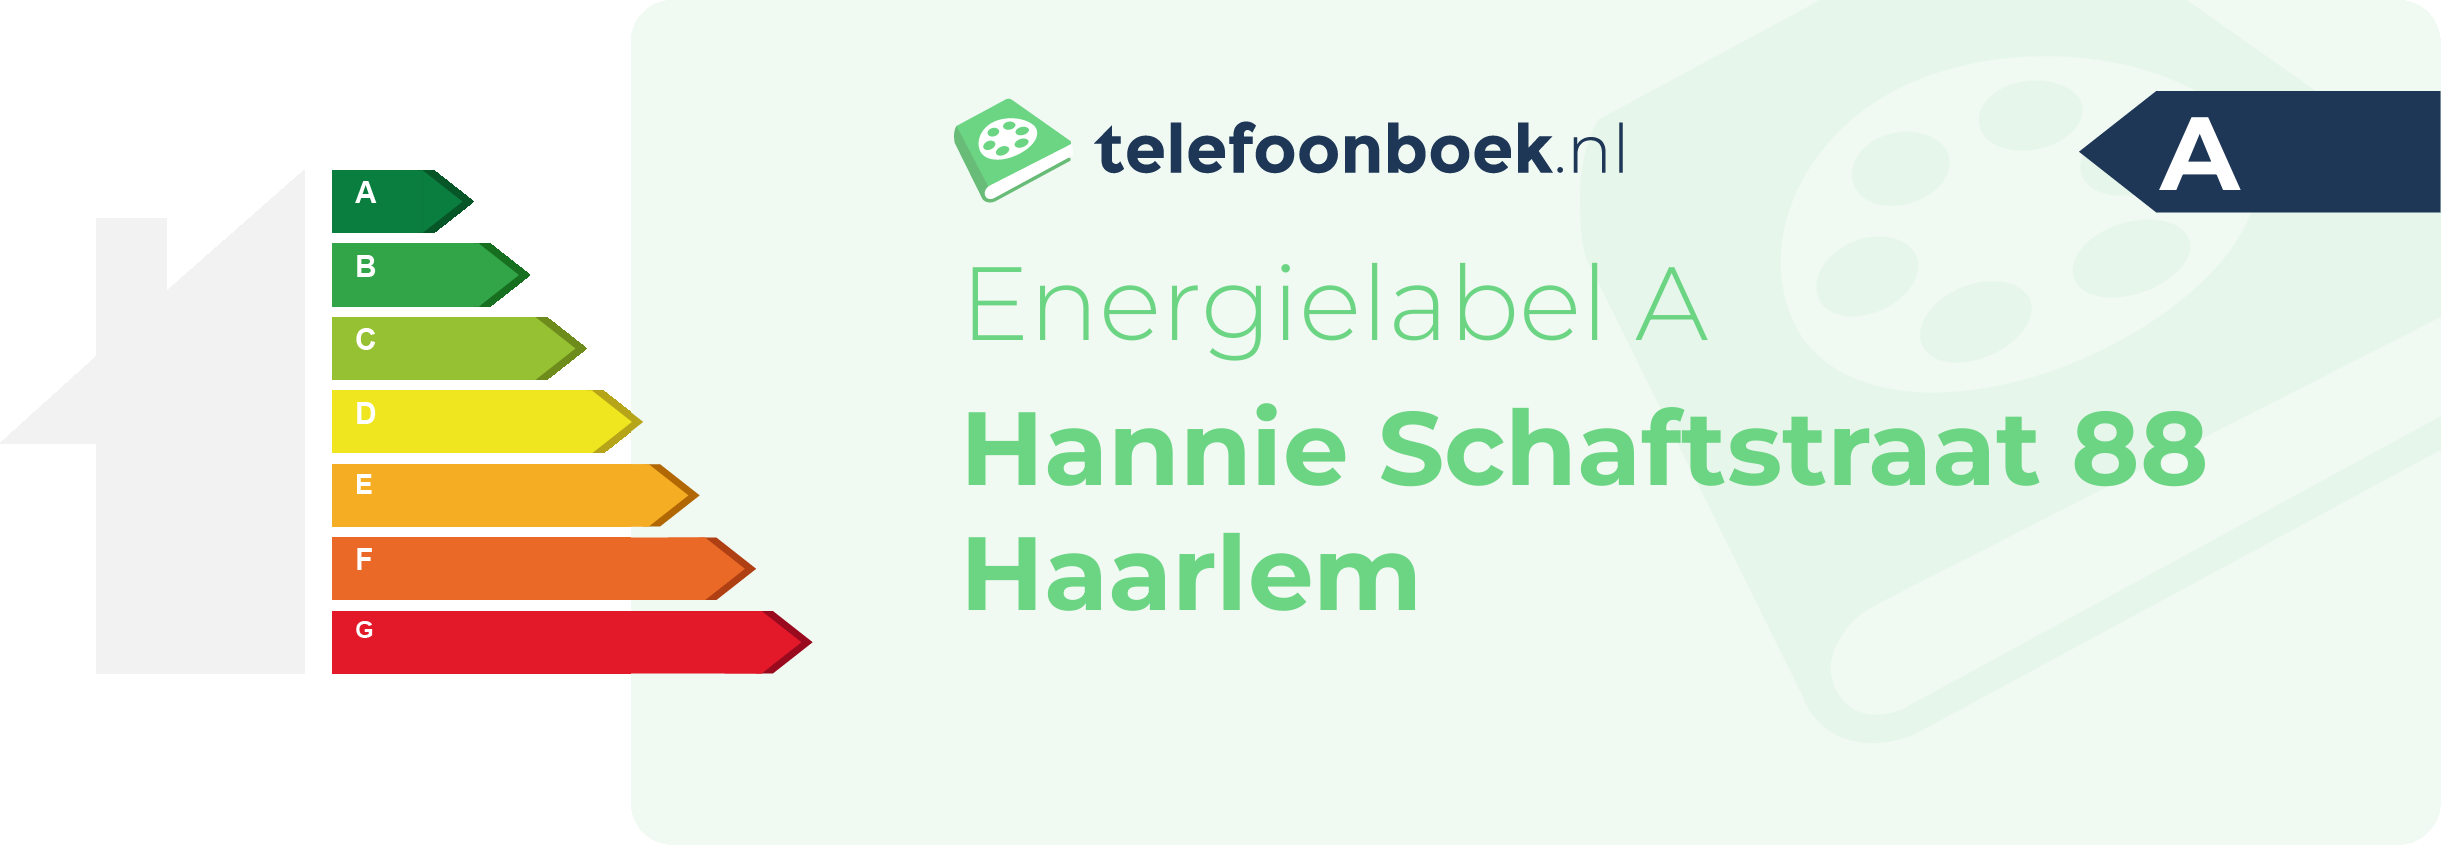 Energielabel Hannie Schaftstraat 88 Haarlem